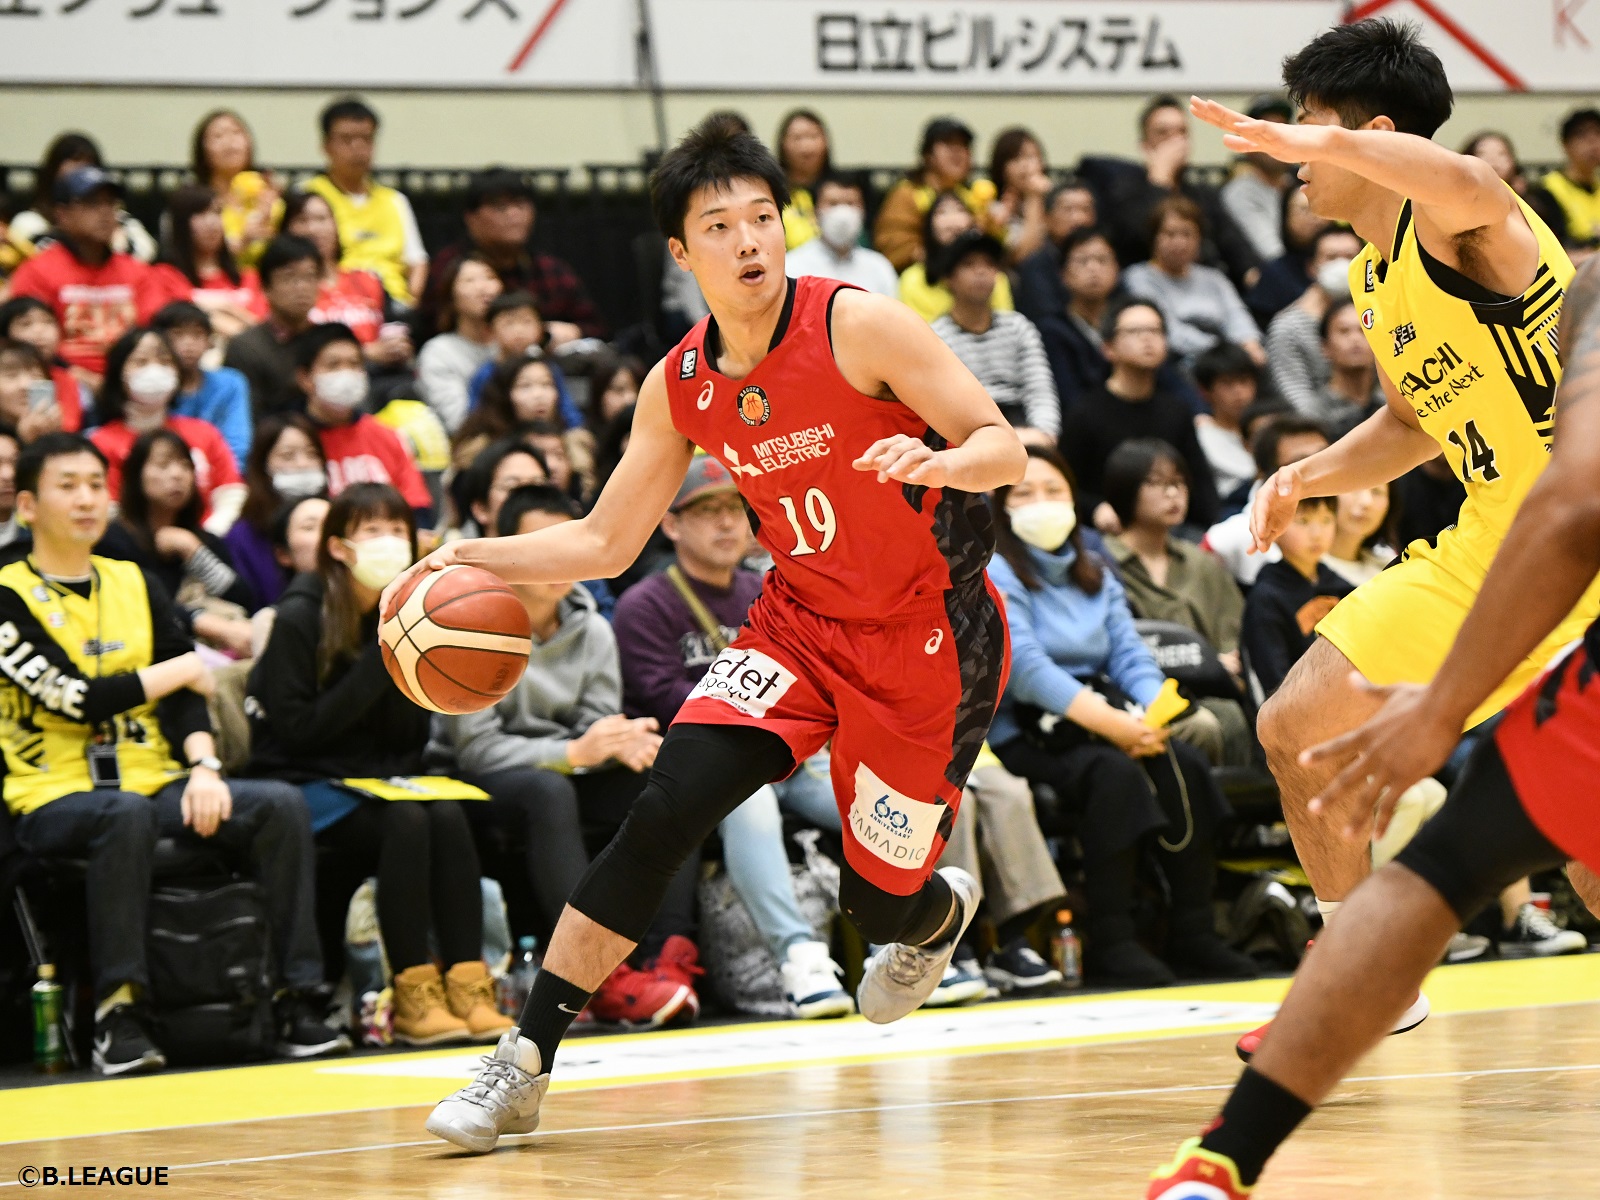 Bリーグに代表合宿 西田優大が過ごす刺激的な日々とその先に見る未来 バスケットボールキング